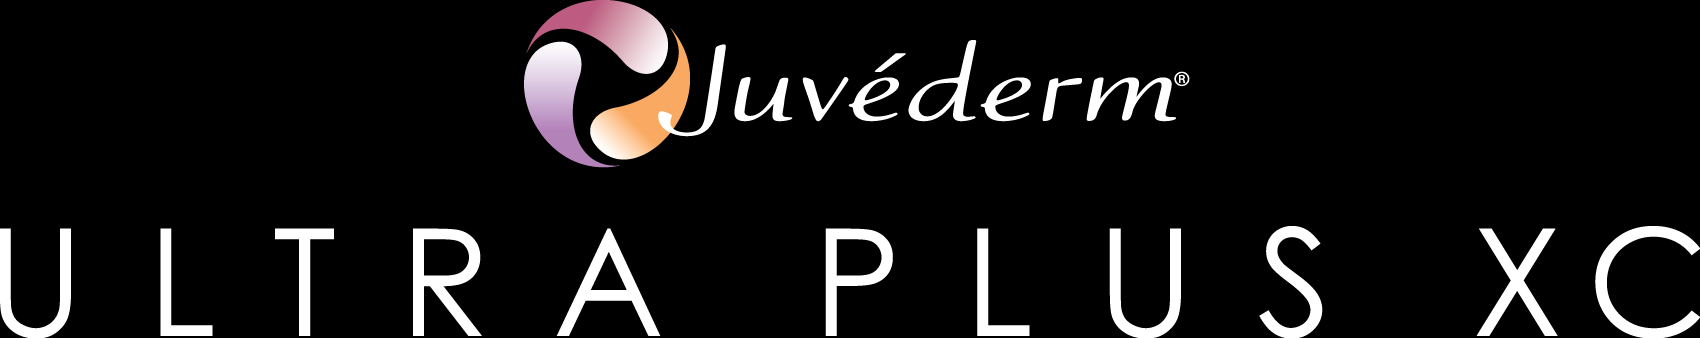 Juvederm Ultra Plus XC logo